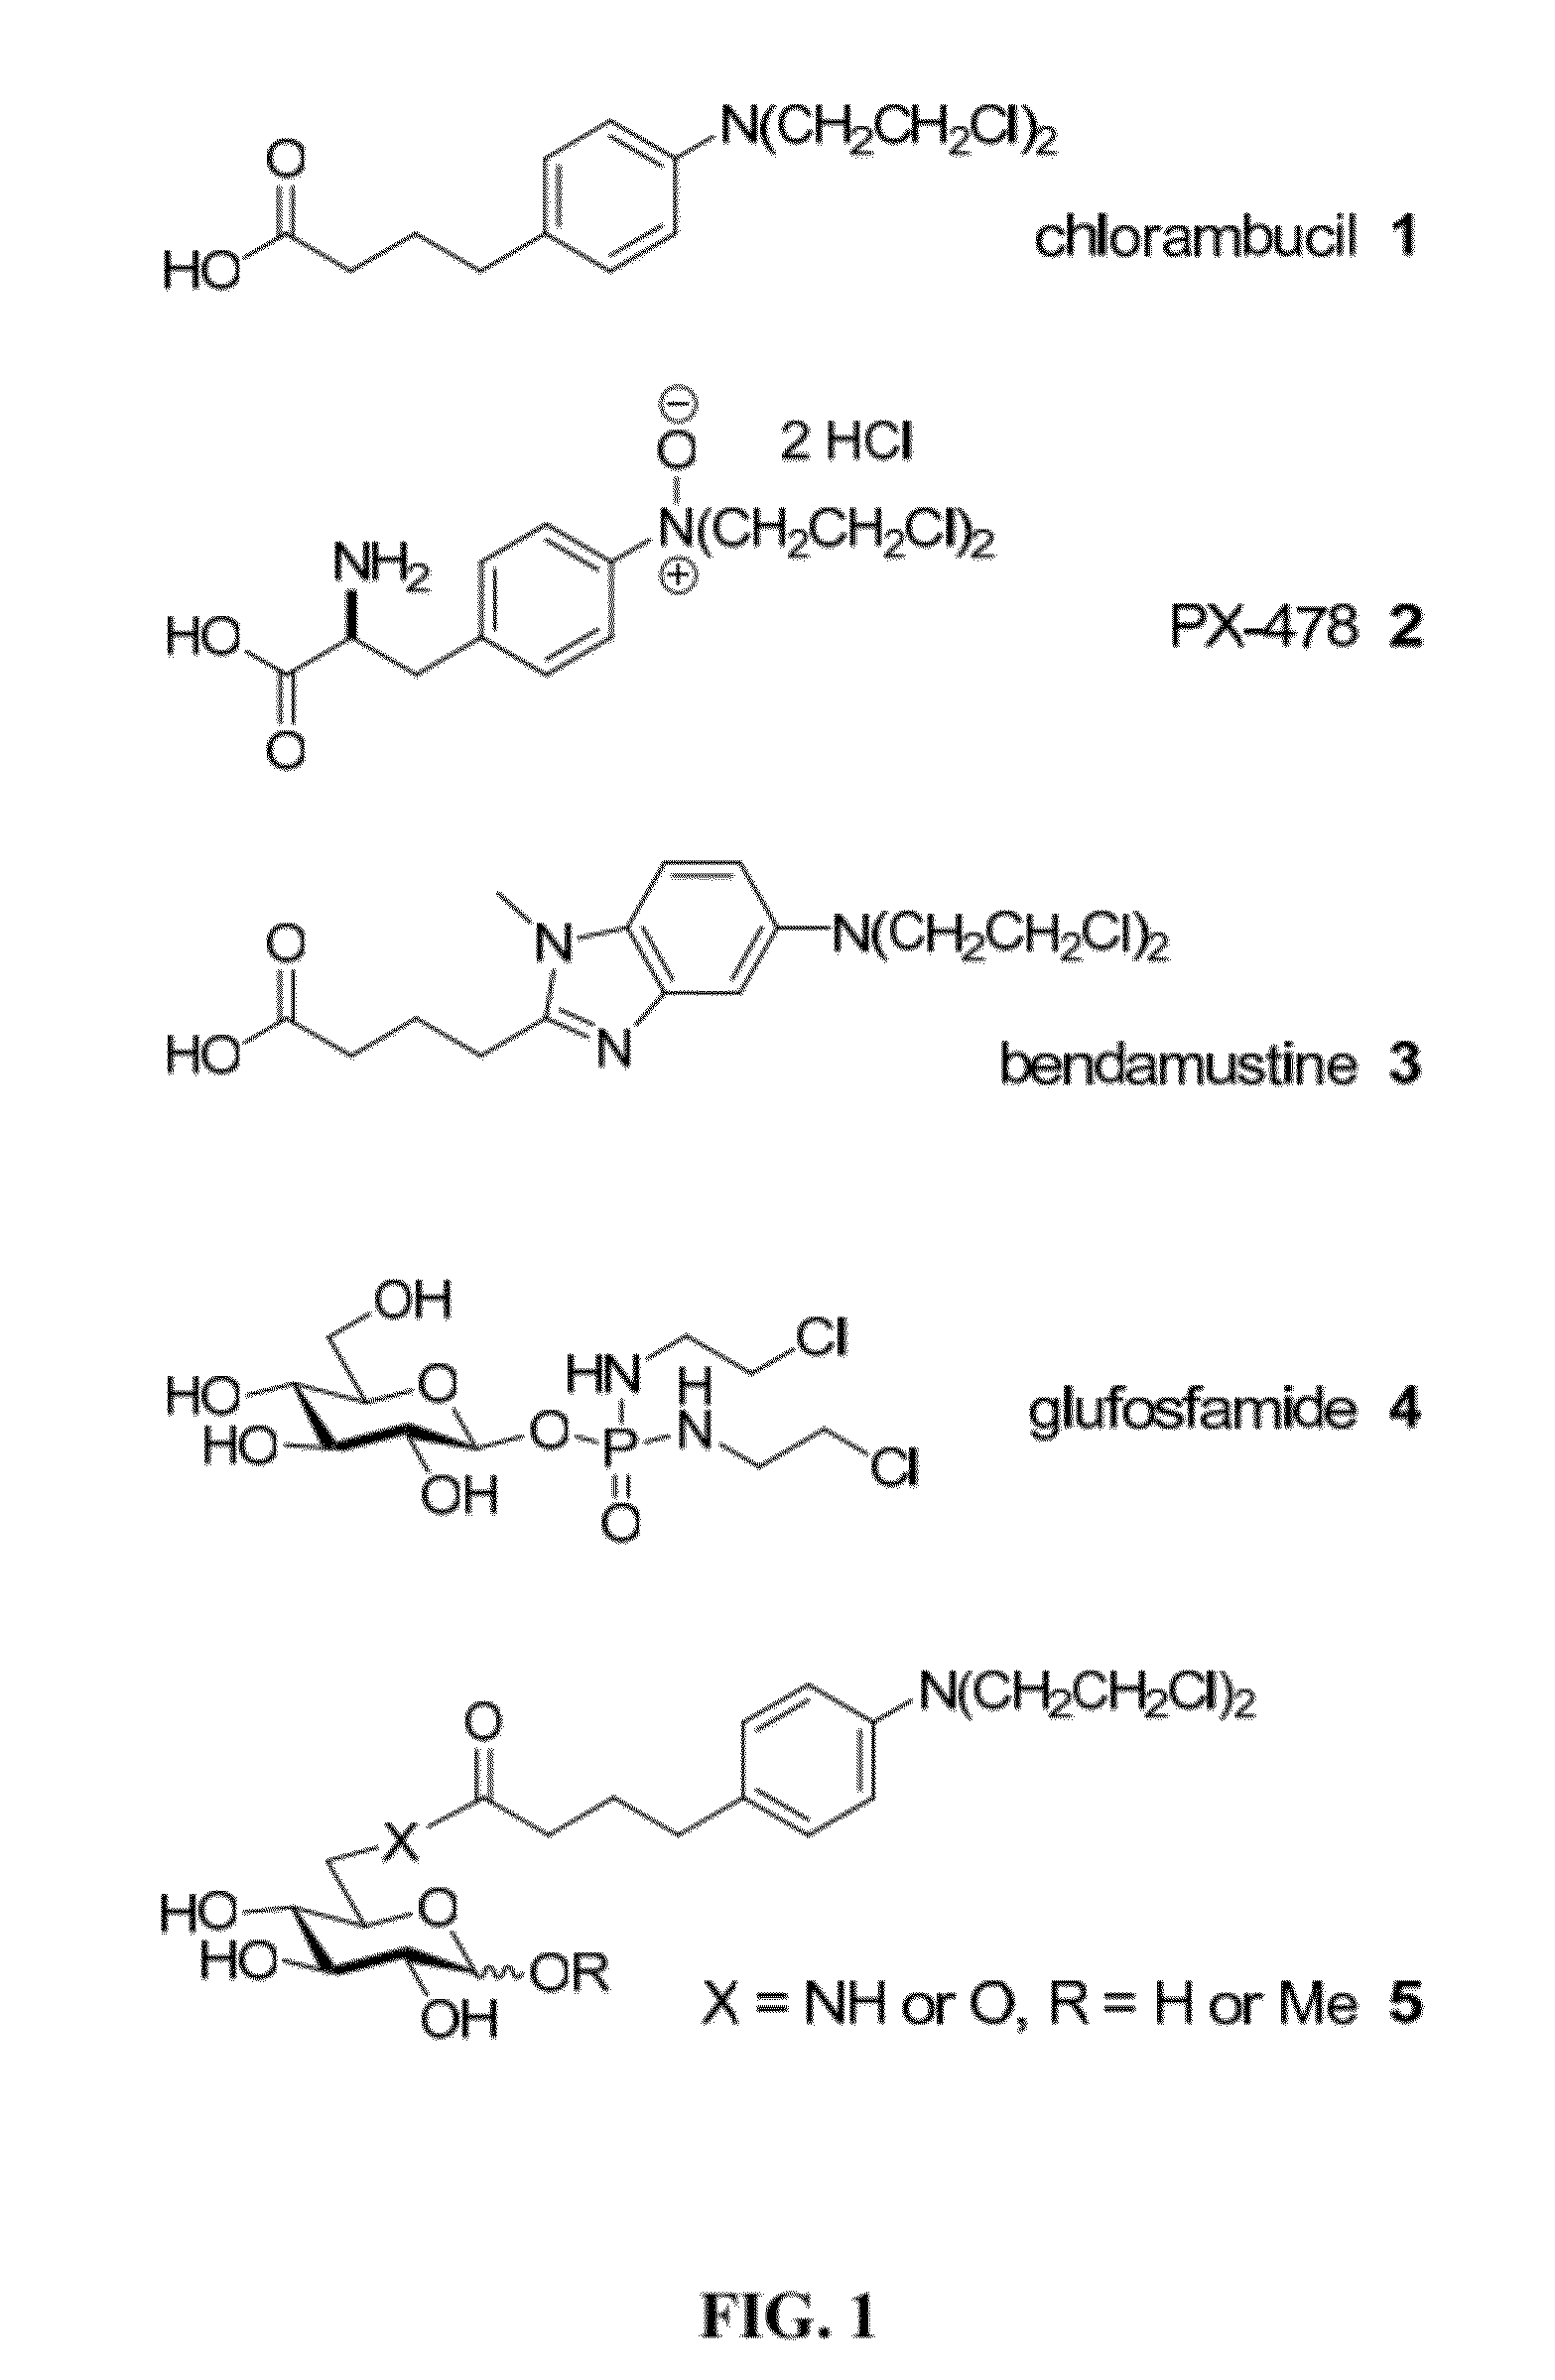 Glycosylated chlorambucil analogs and uses thereof